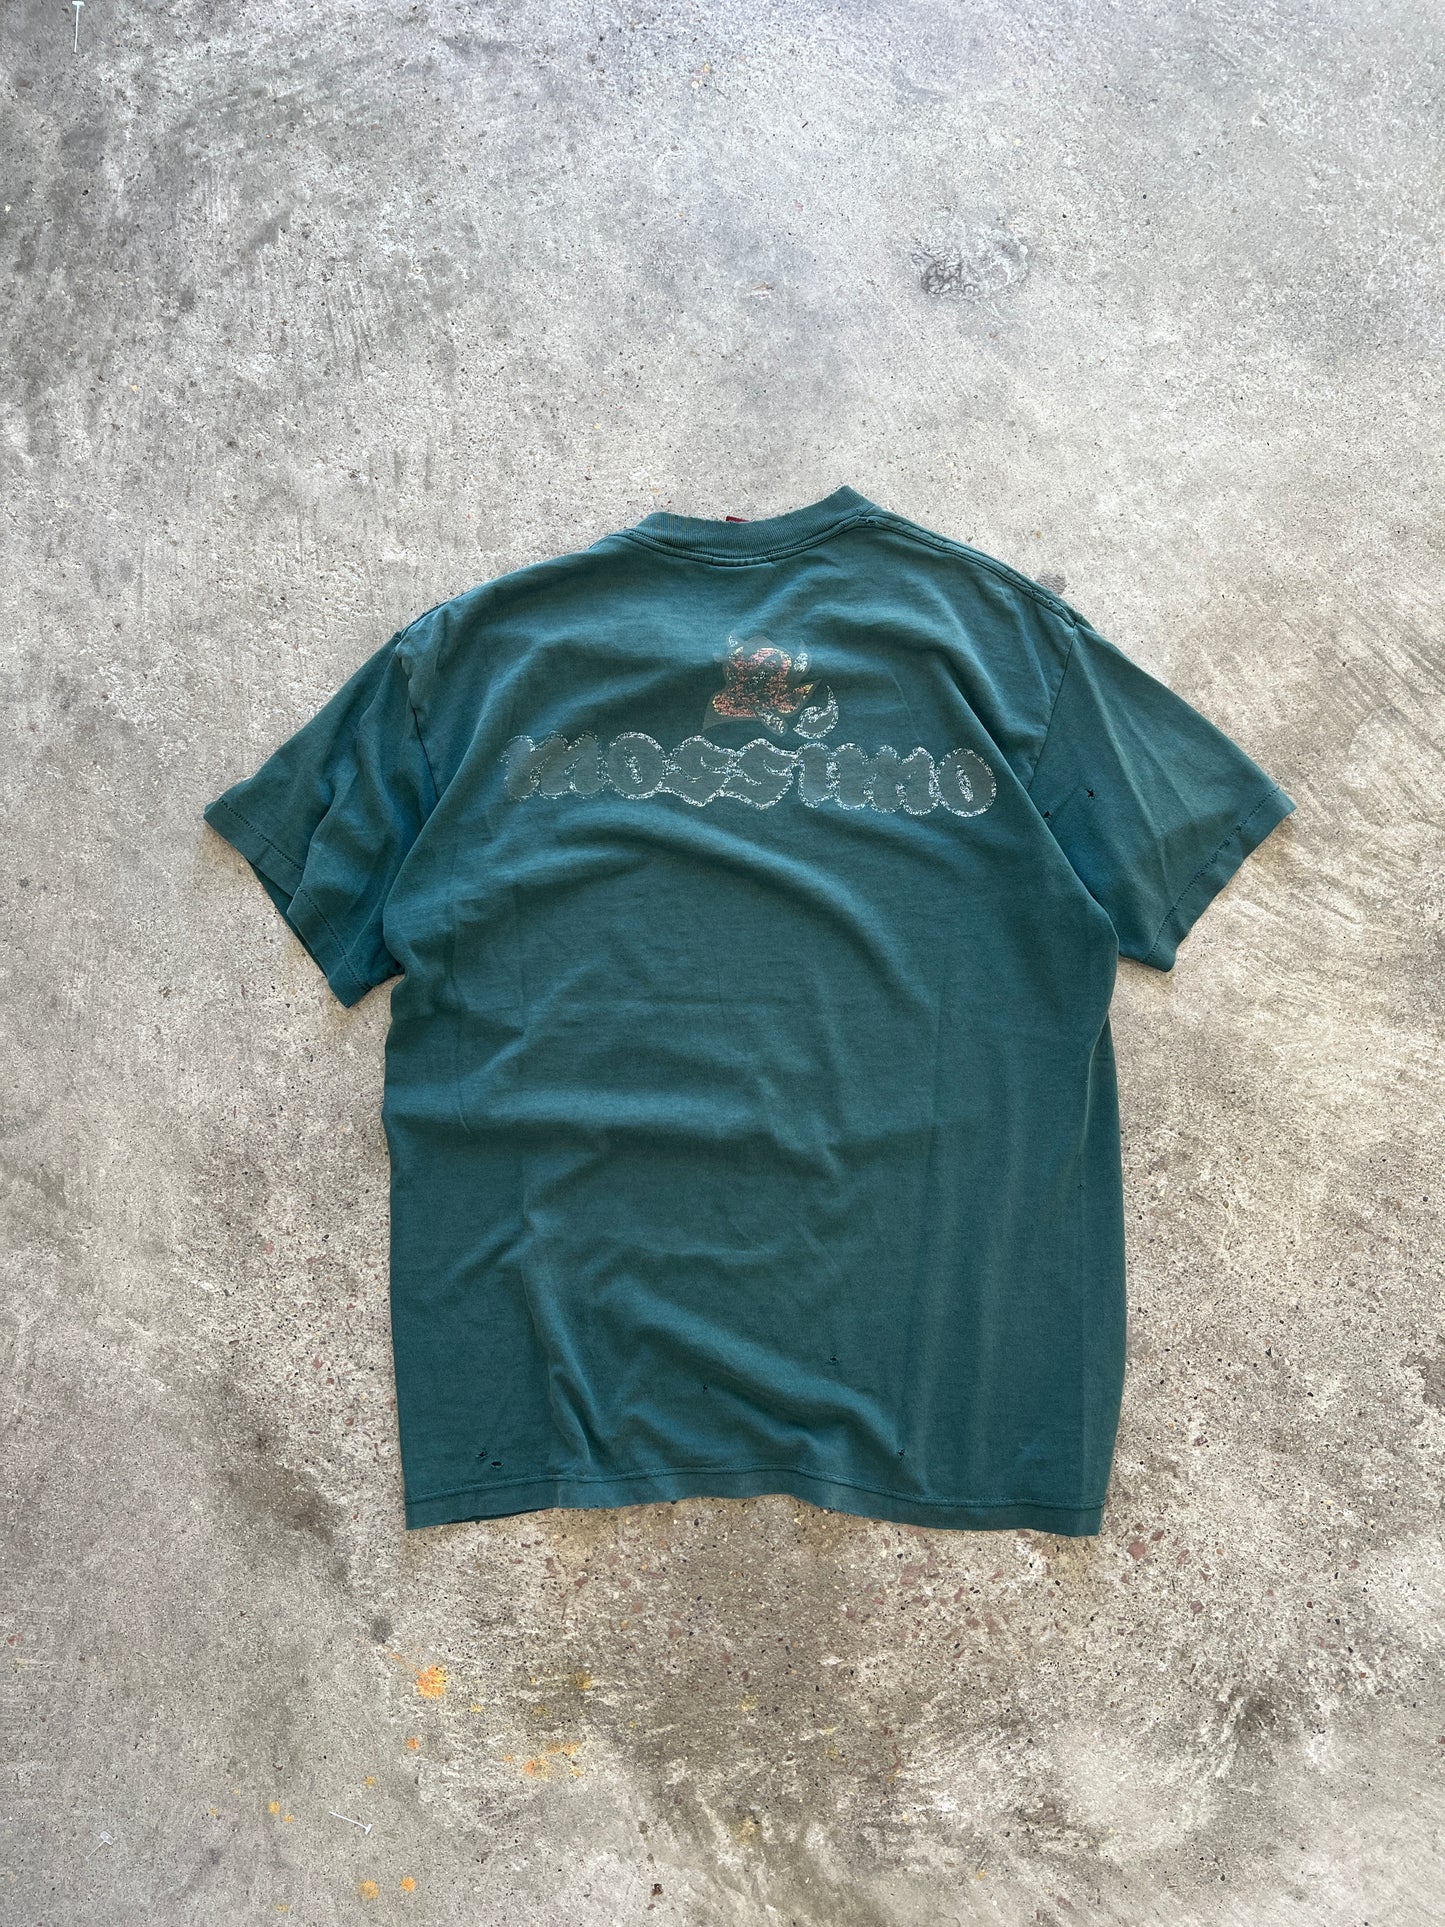 Vintage Green Mossimo Shirt - M